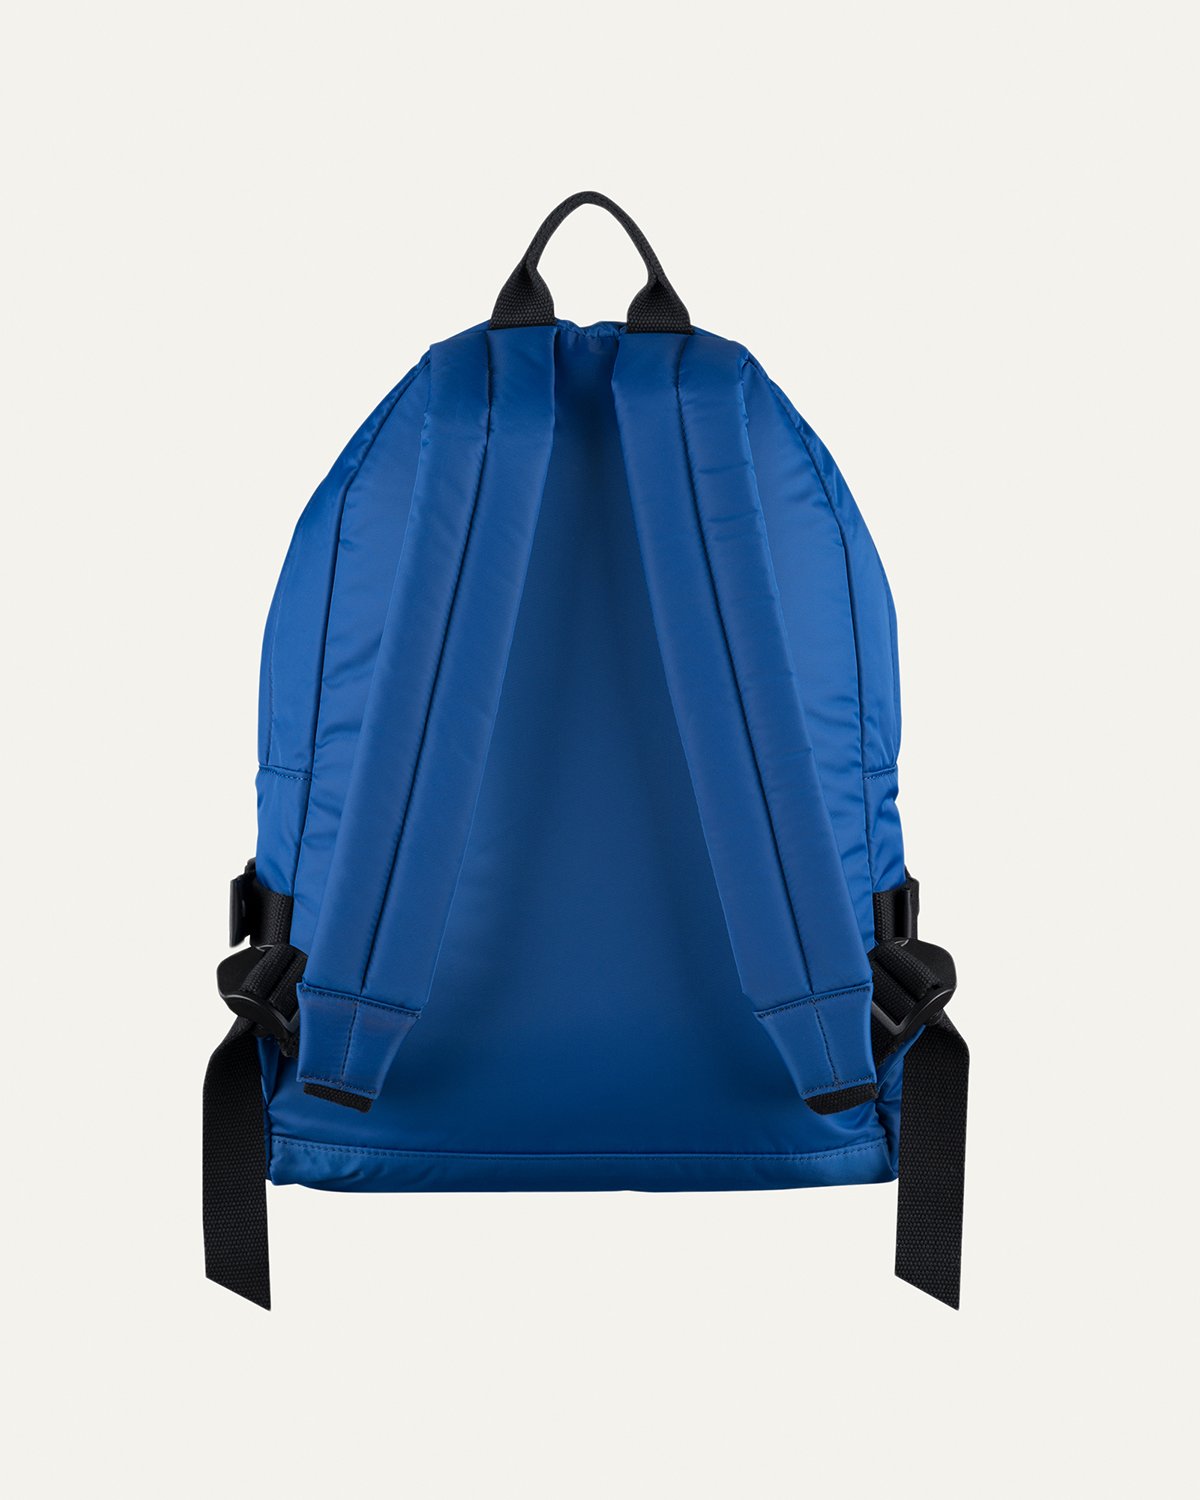 A.P.C. x Carhartt WIP - Shawn Backpack Indigo - Accessories - Blue - Image 4